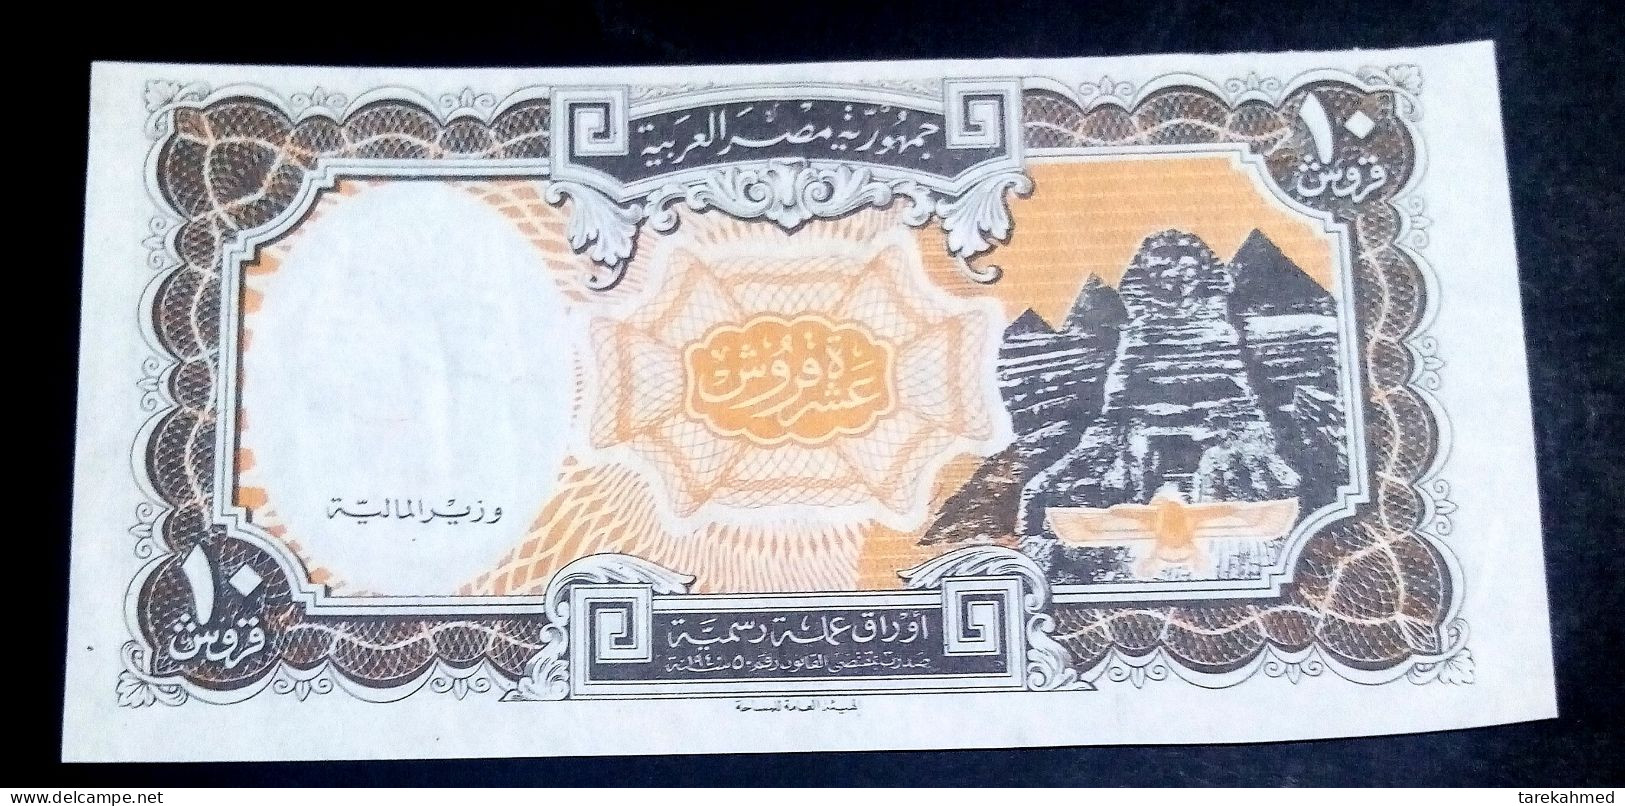 Egypt 1997, Rare Error 10 Piastres - No Arabic Signature No Serial Number  - UNC - Egipto